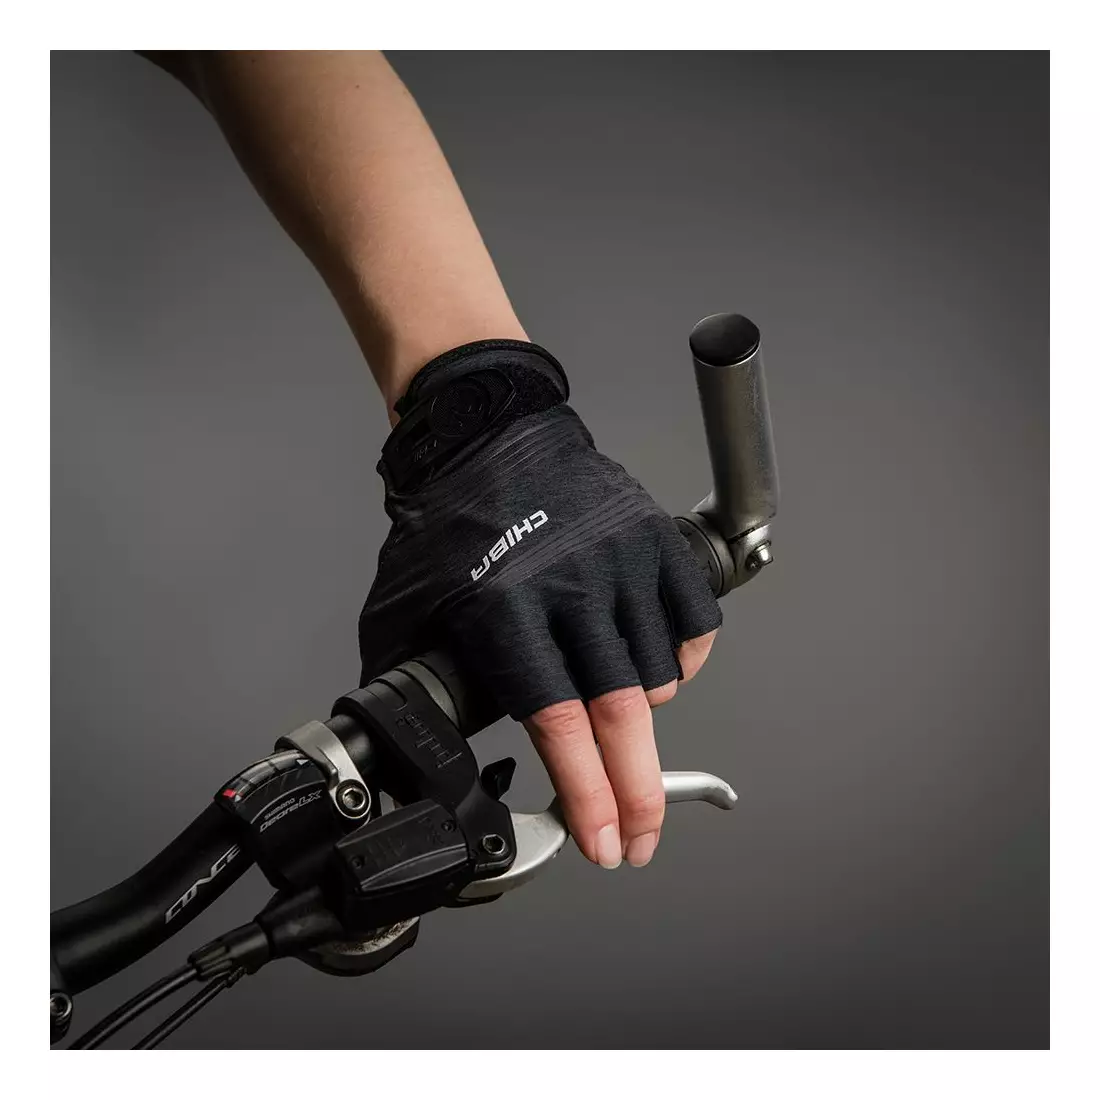 CHIBA LADY SUPER LIGHT women's cycling gloves, gray-black 3090220